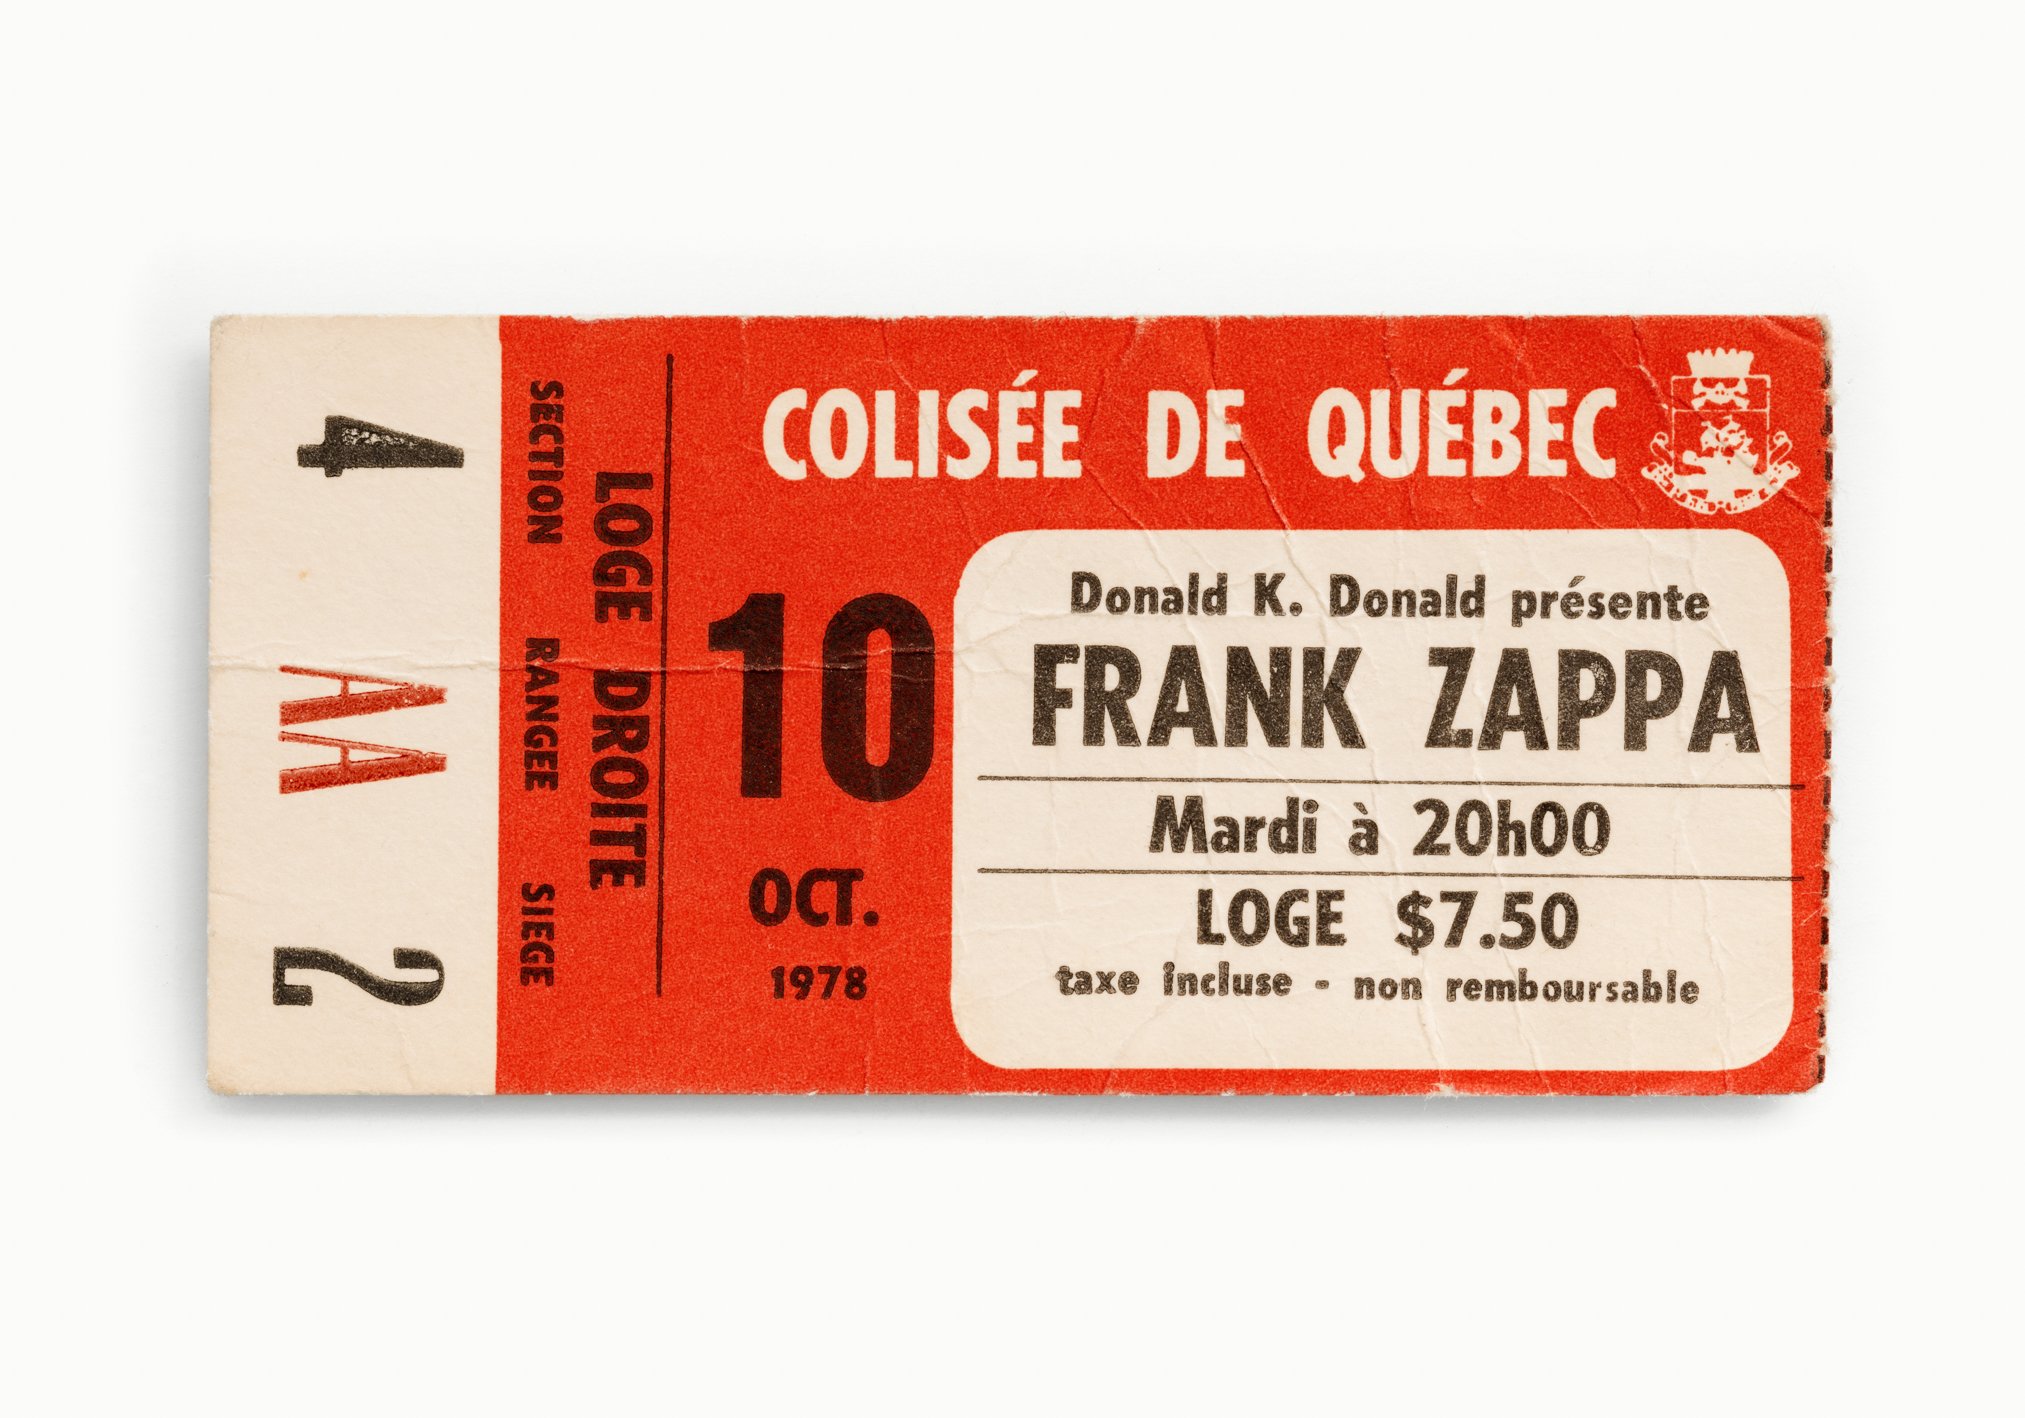 Frank Zappa, Colisee De Quebec, Quebec City, Canada 1978